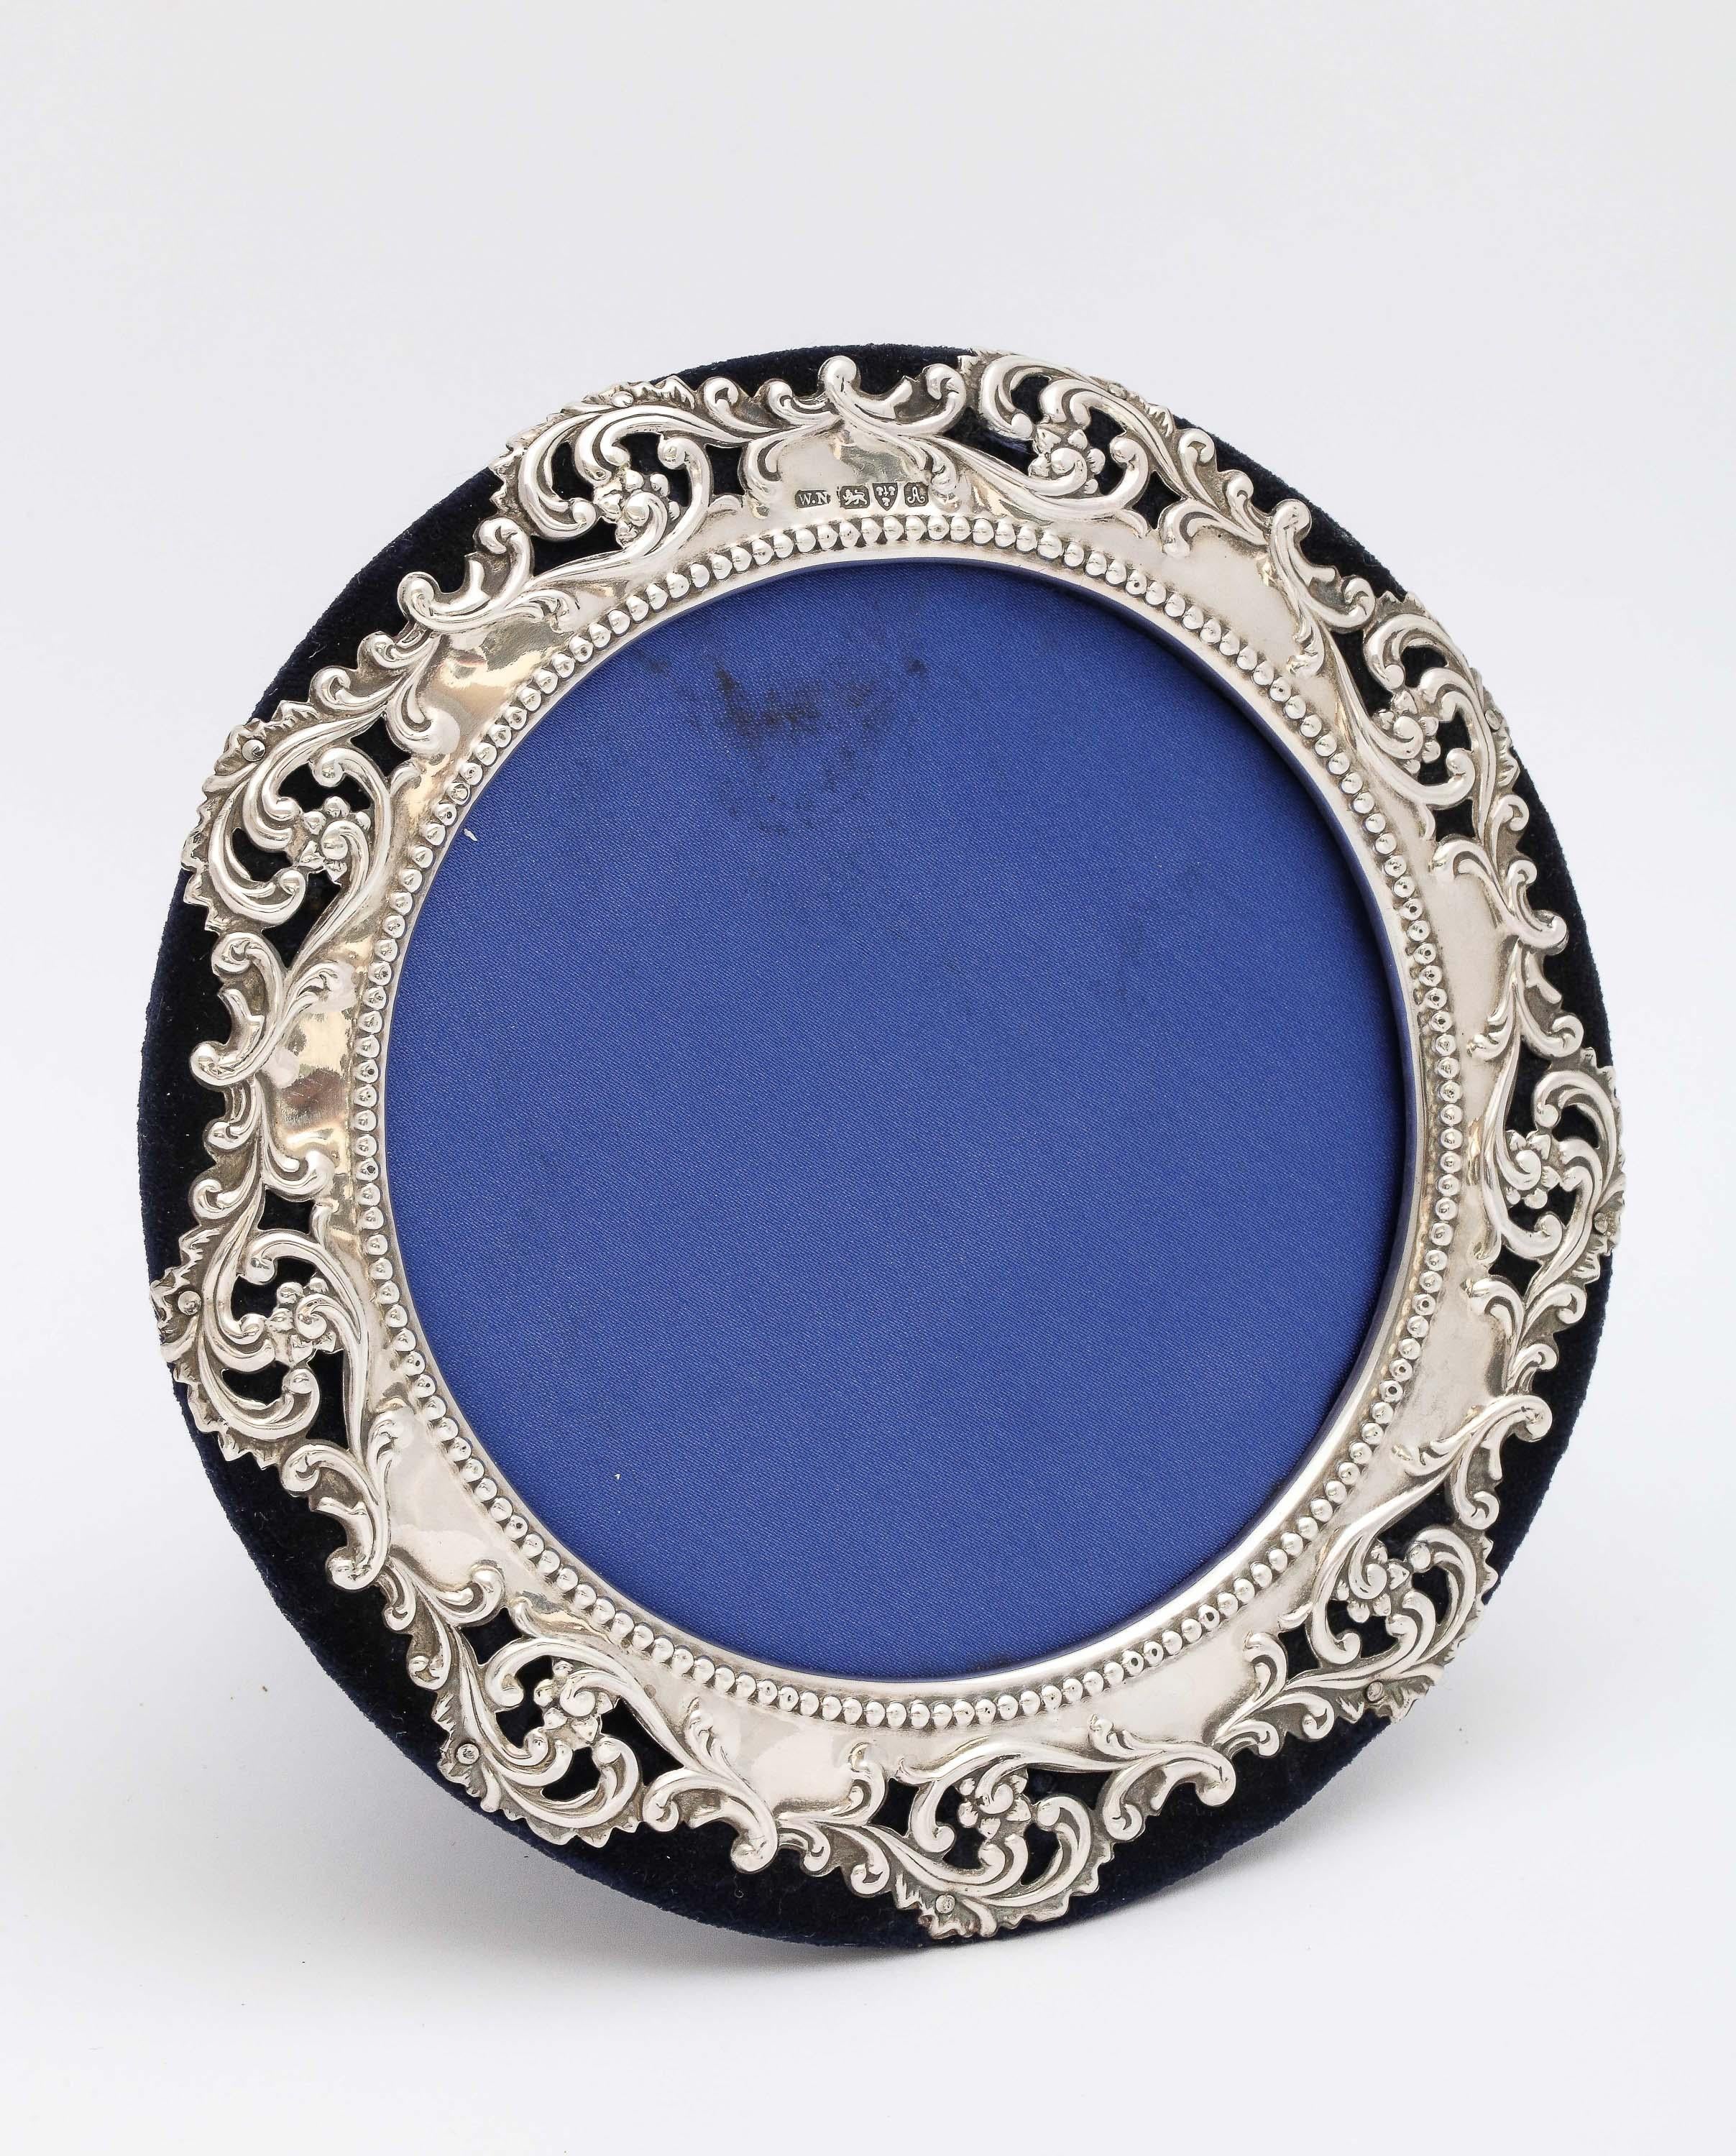 Edwardian Sterling Silver Round Picture Frame Mounted on Dark Blue Velvet 1